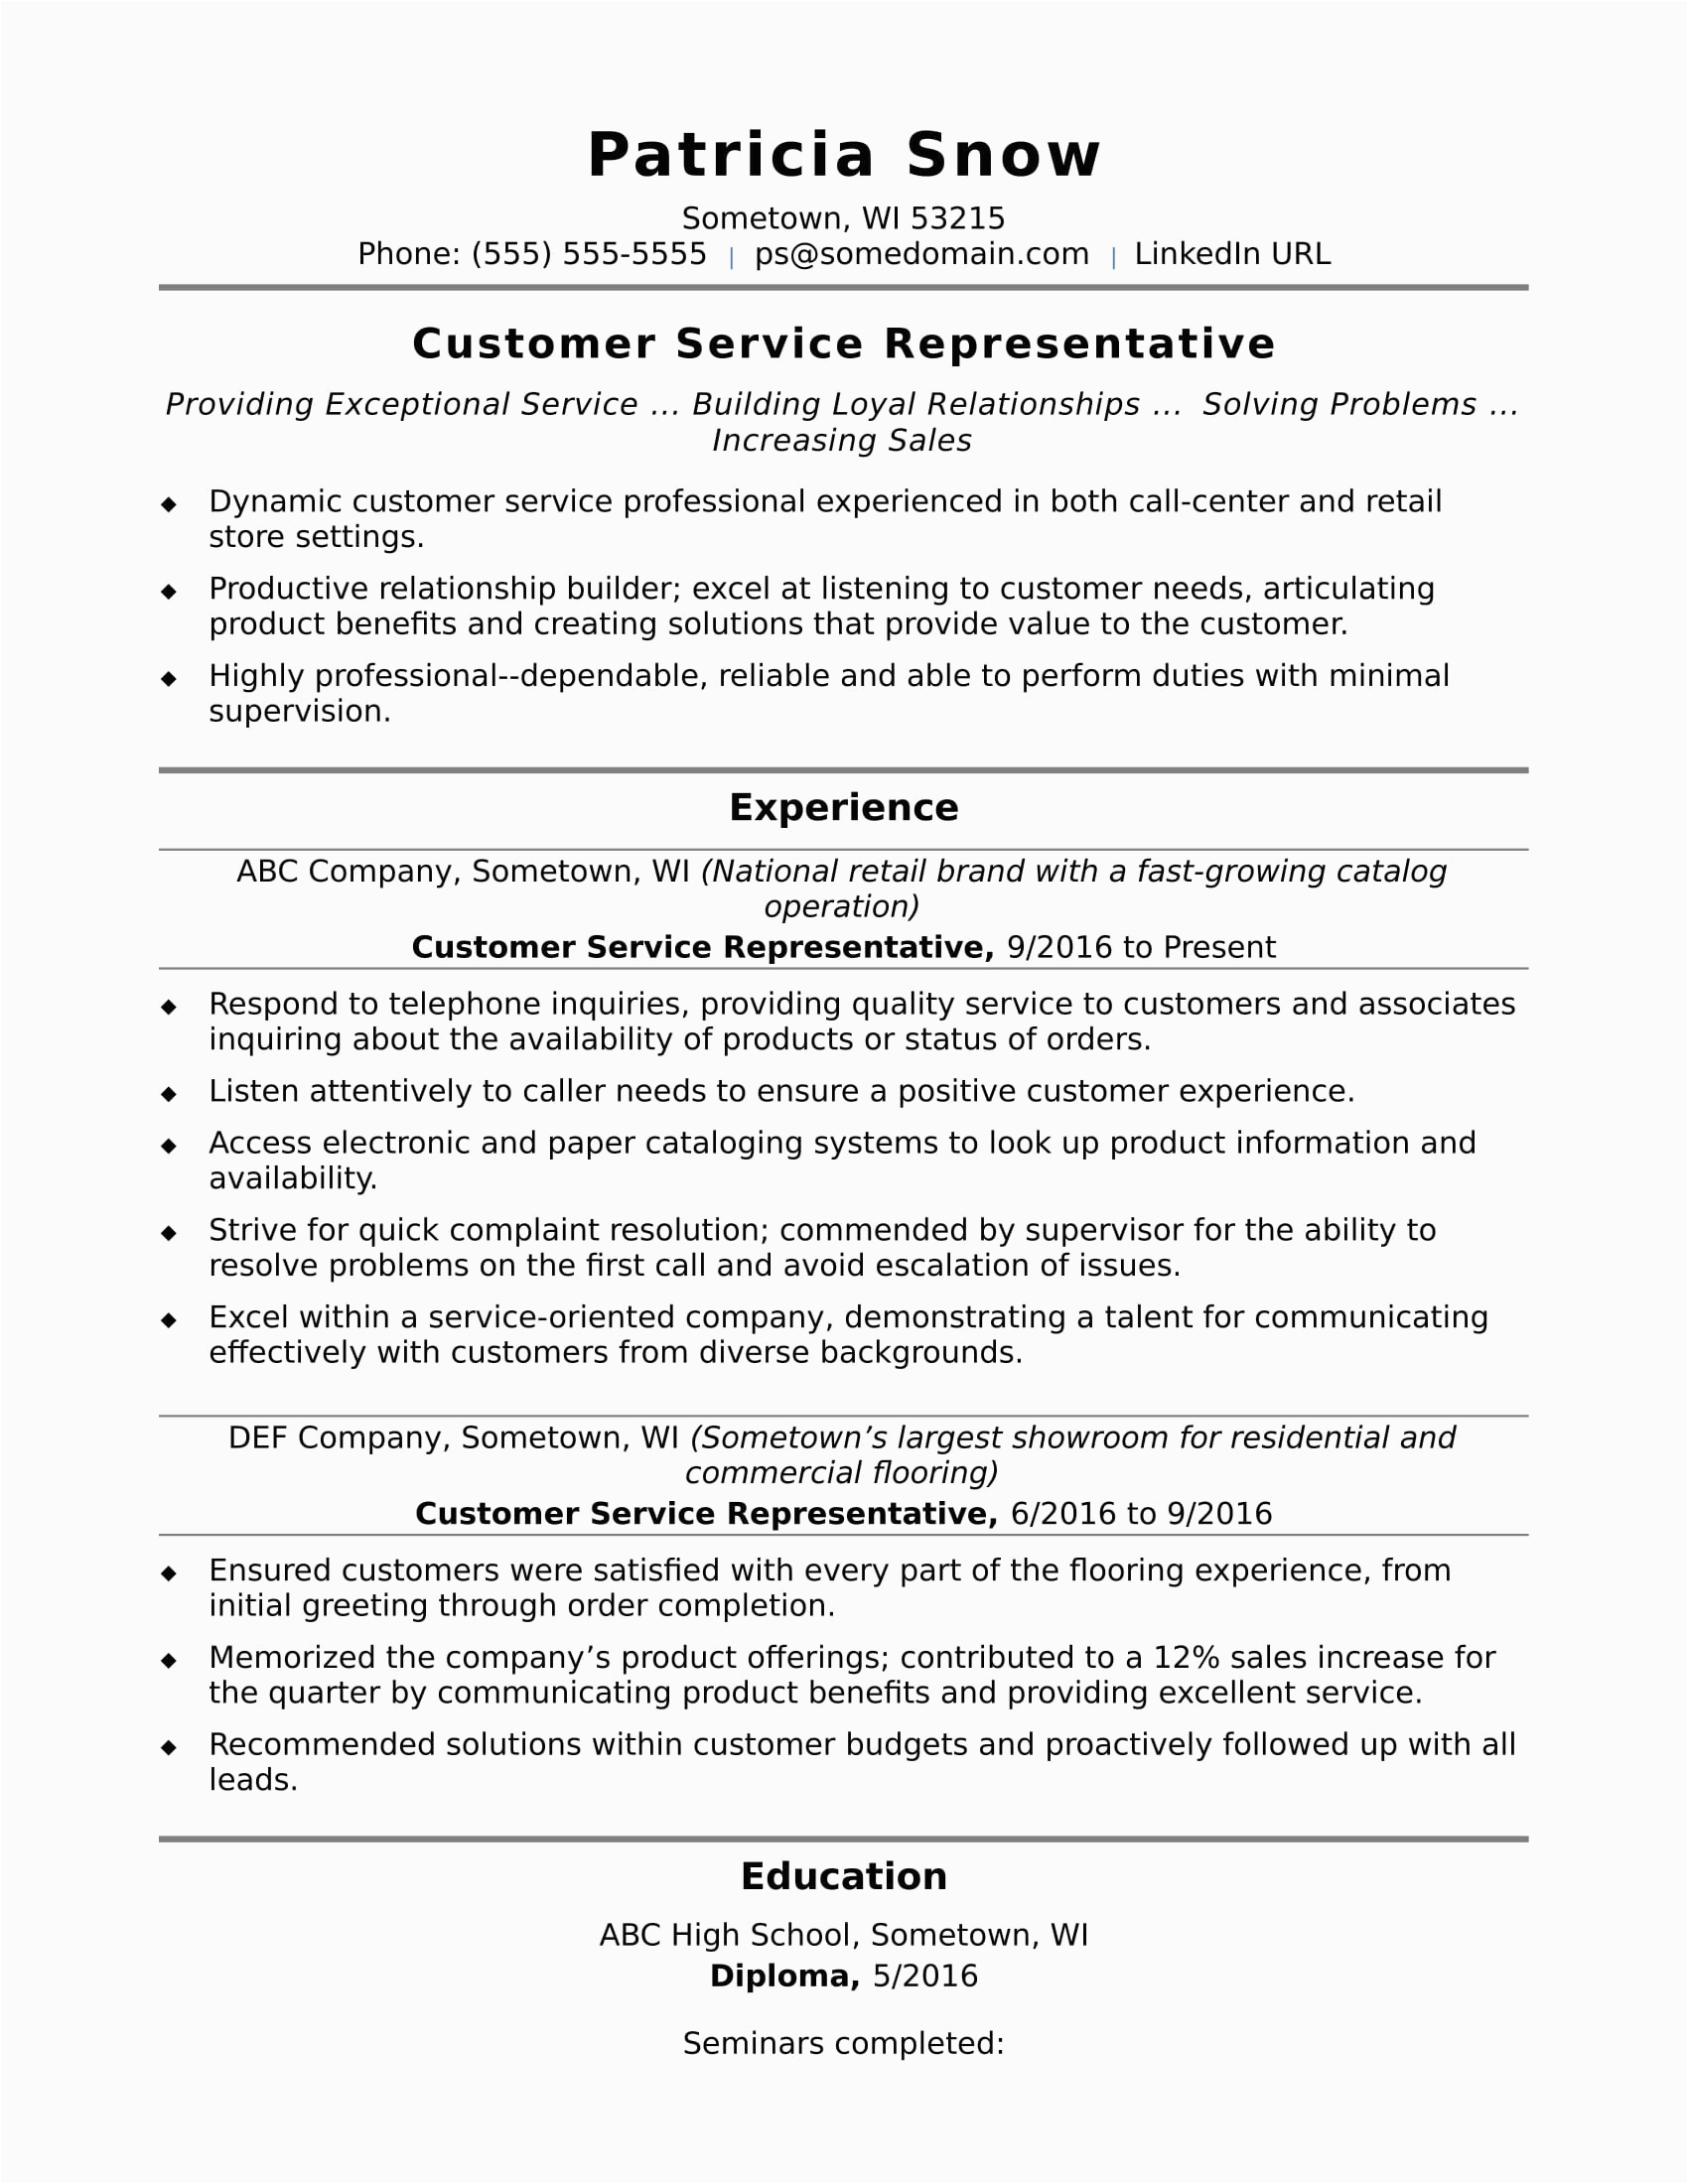 Customer Service Representative Skills Resume Samples Customer Service Representative Resume Sample